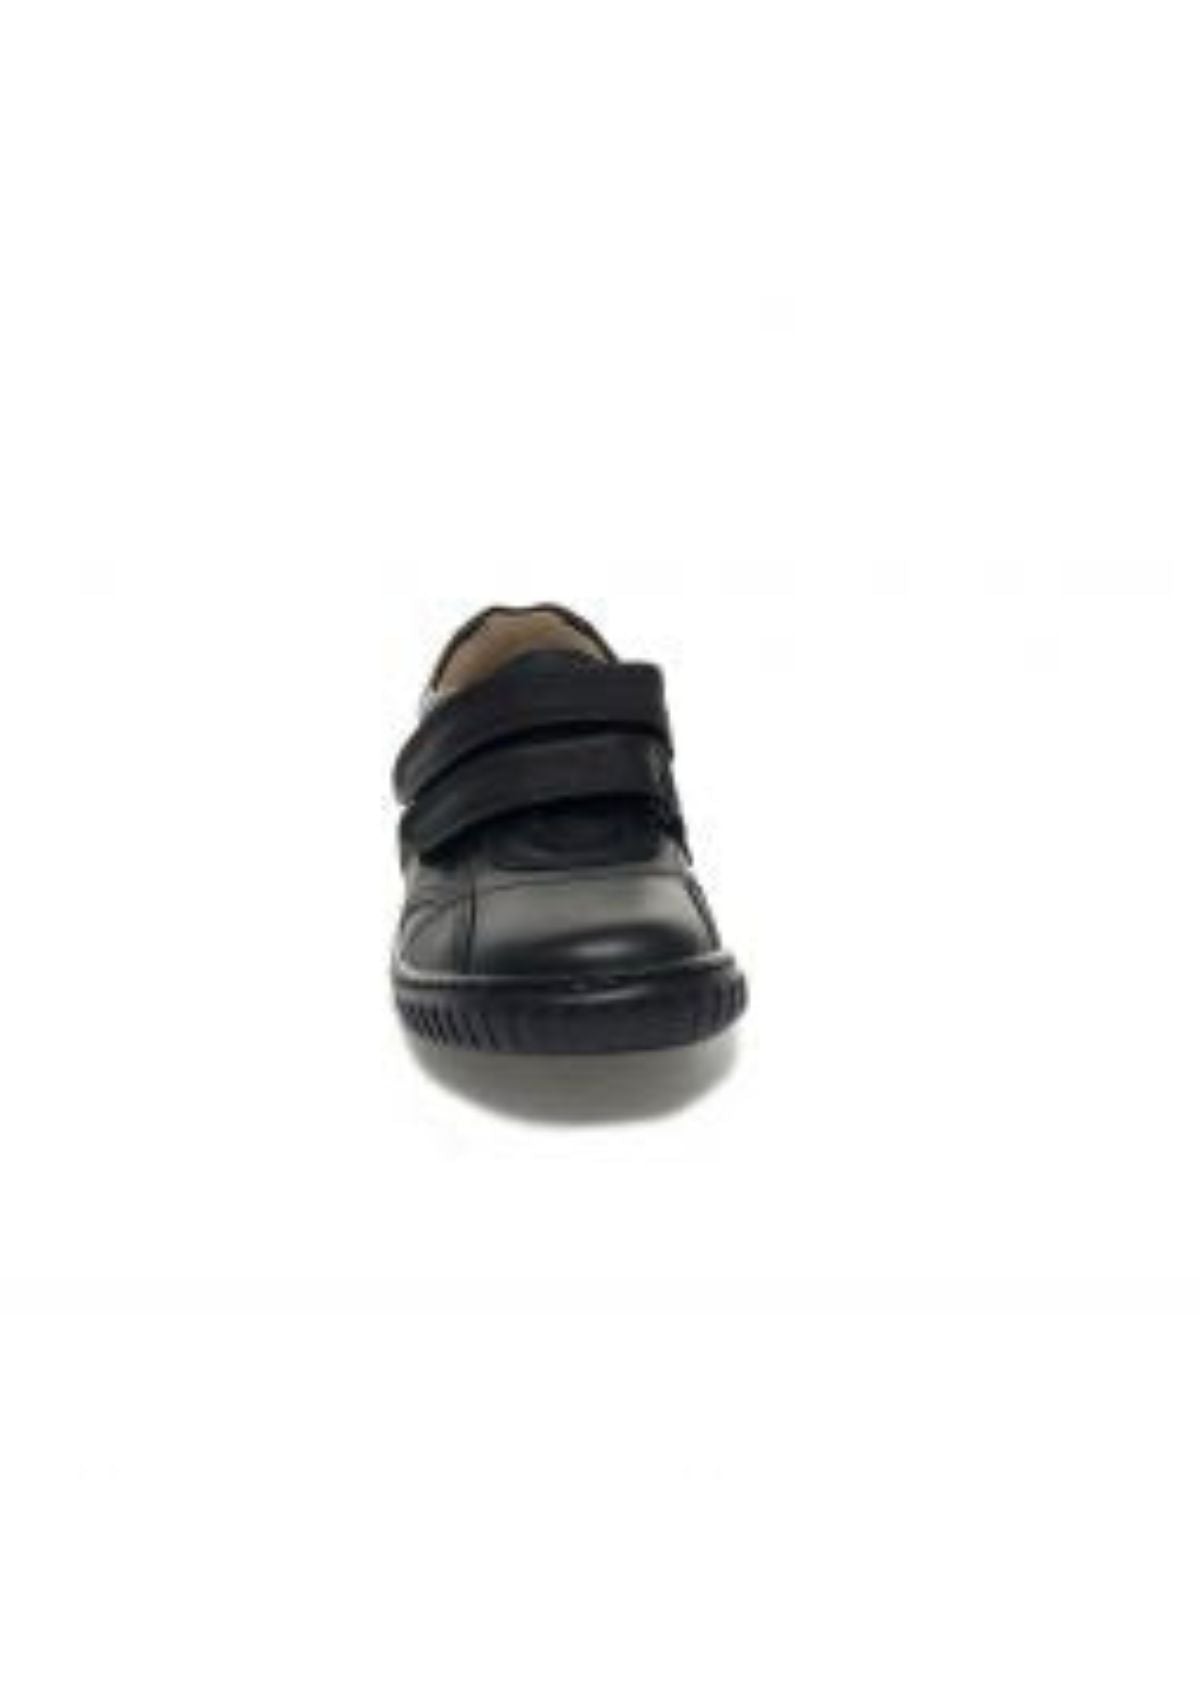 Petasil Boy School Shoe Veejay Black Leather Front